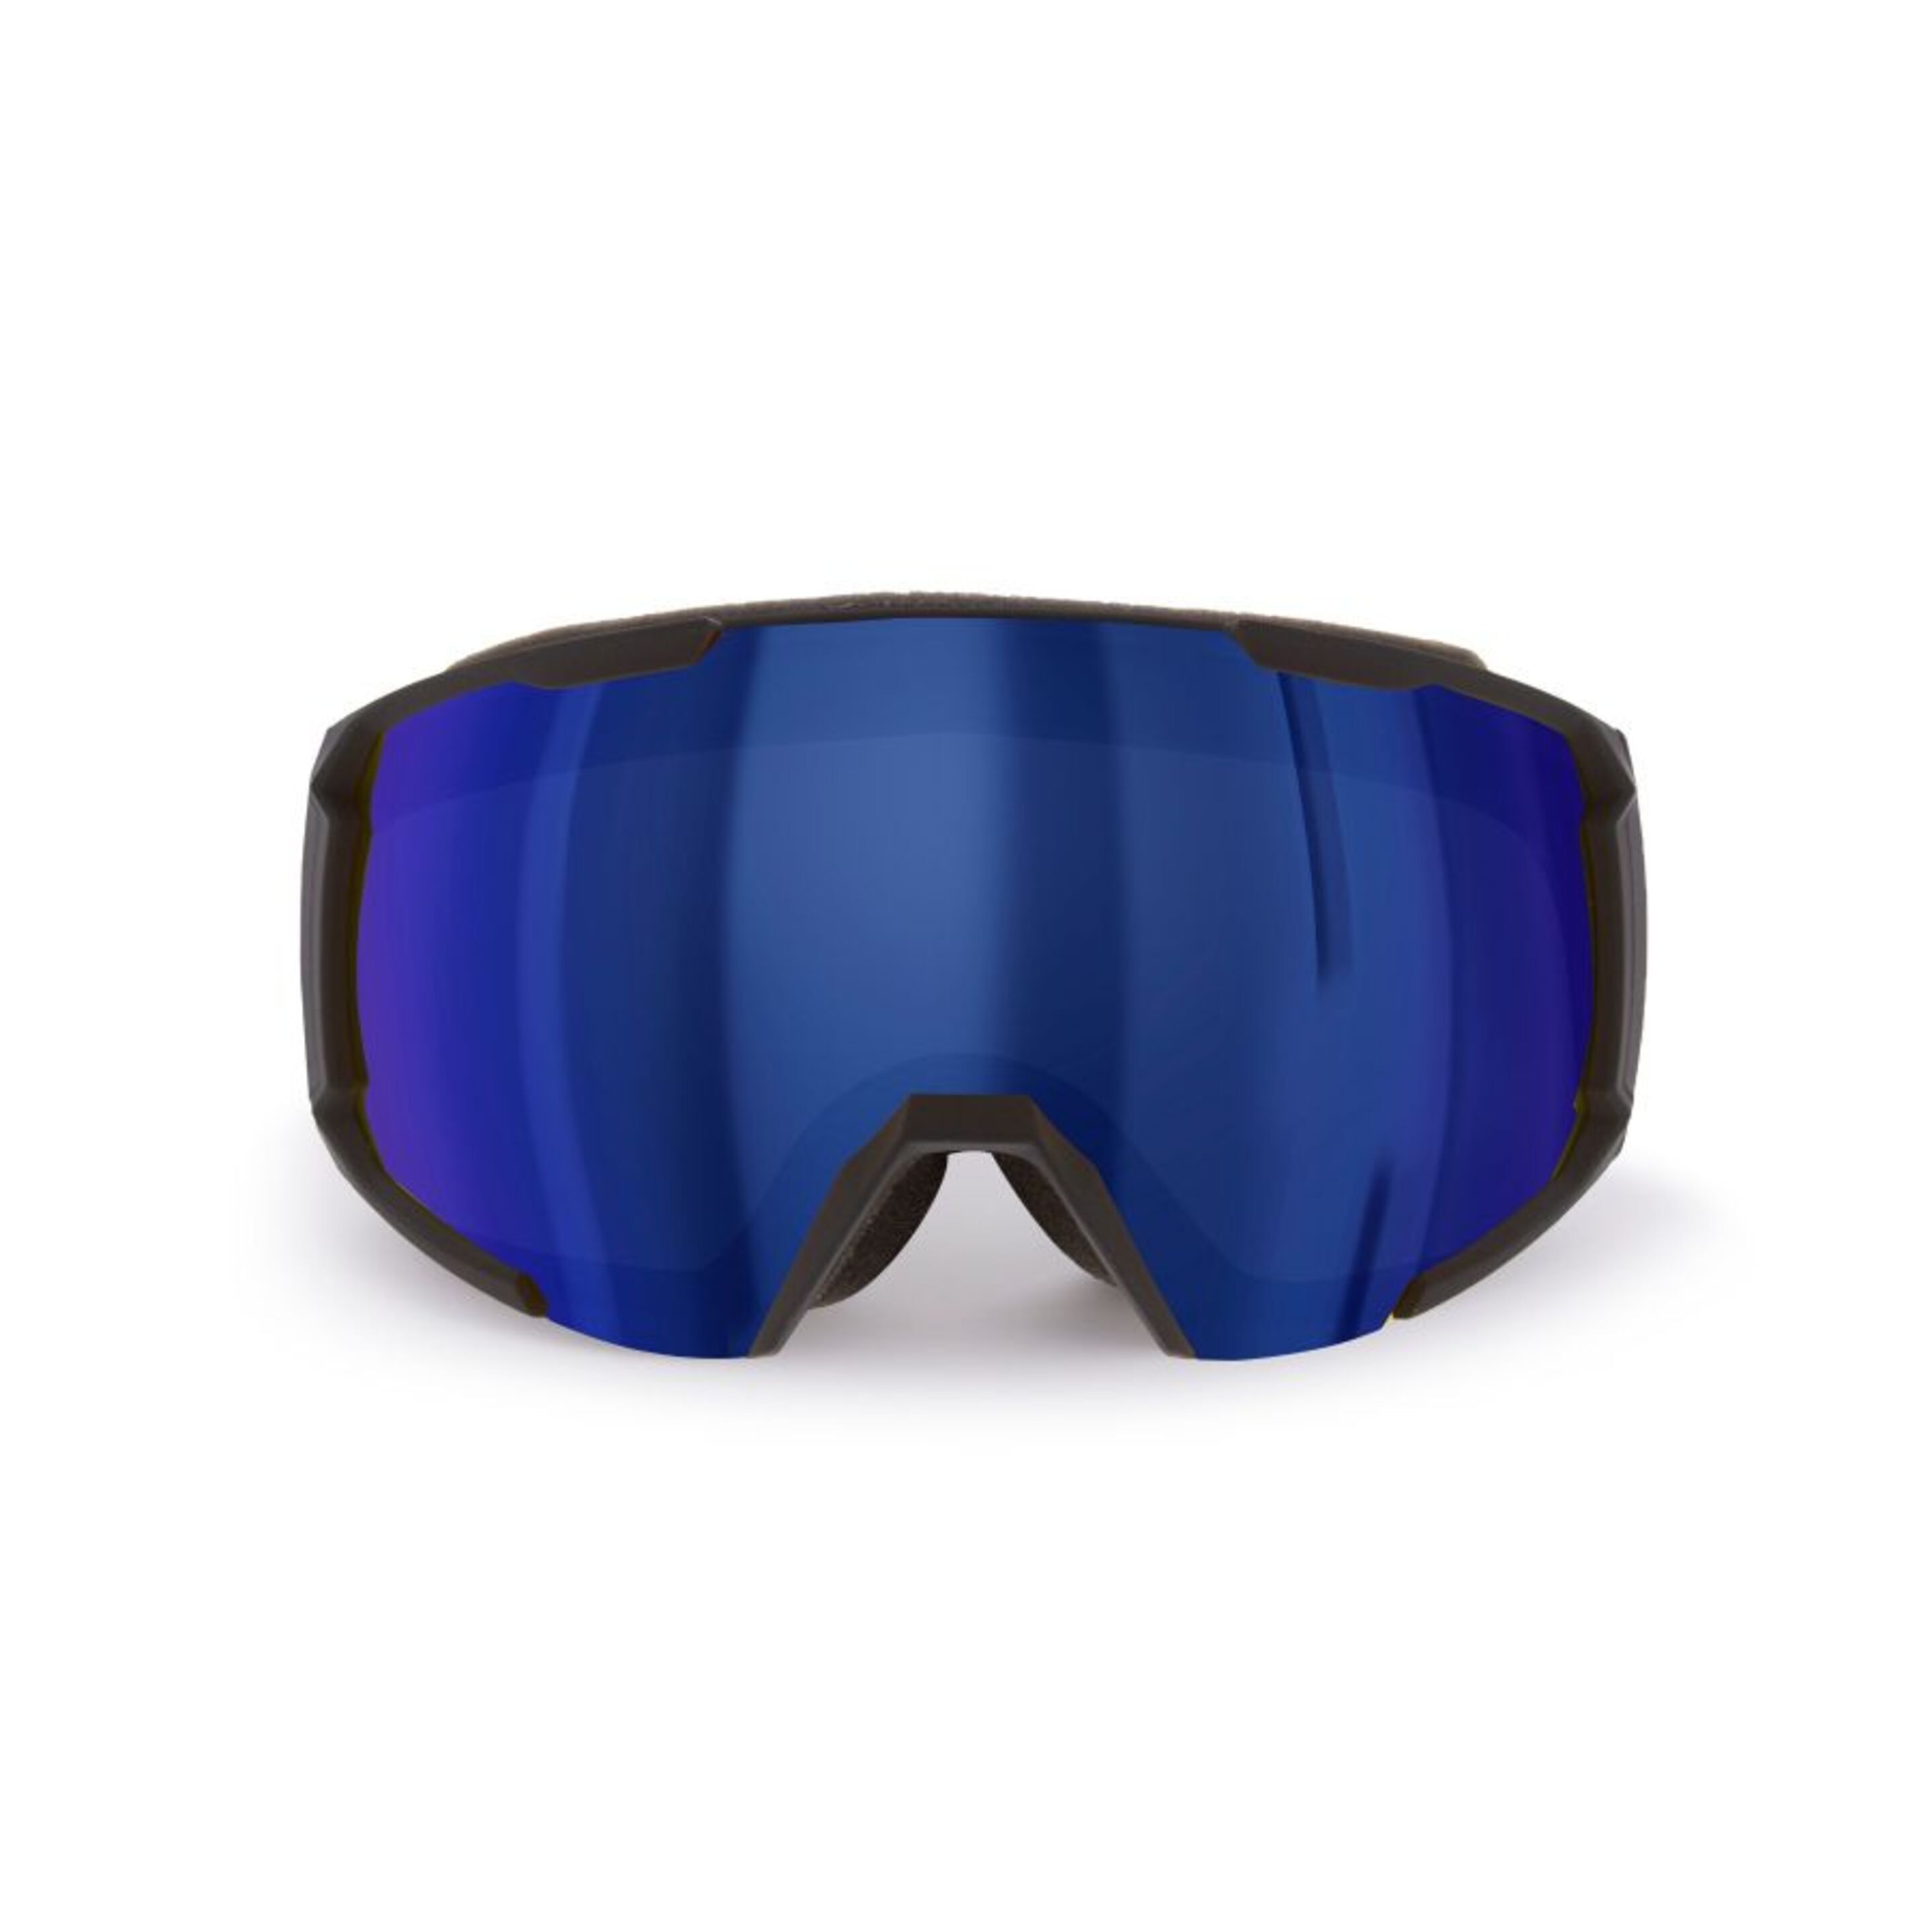 Mascara De Ski Ocean Sunglasses Kalnas